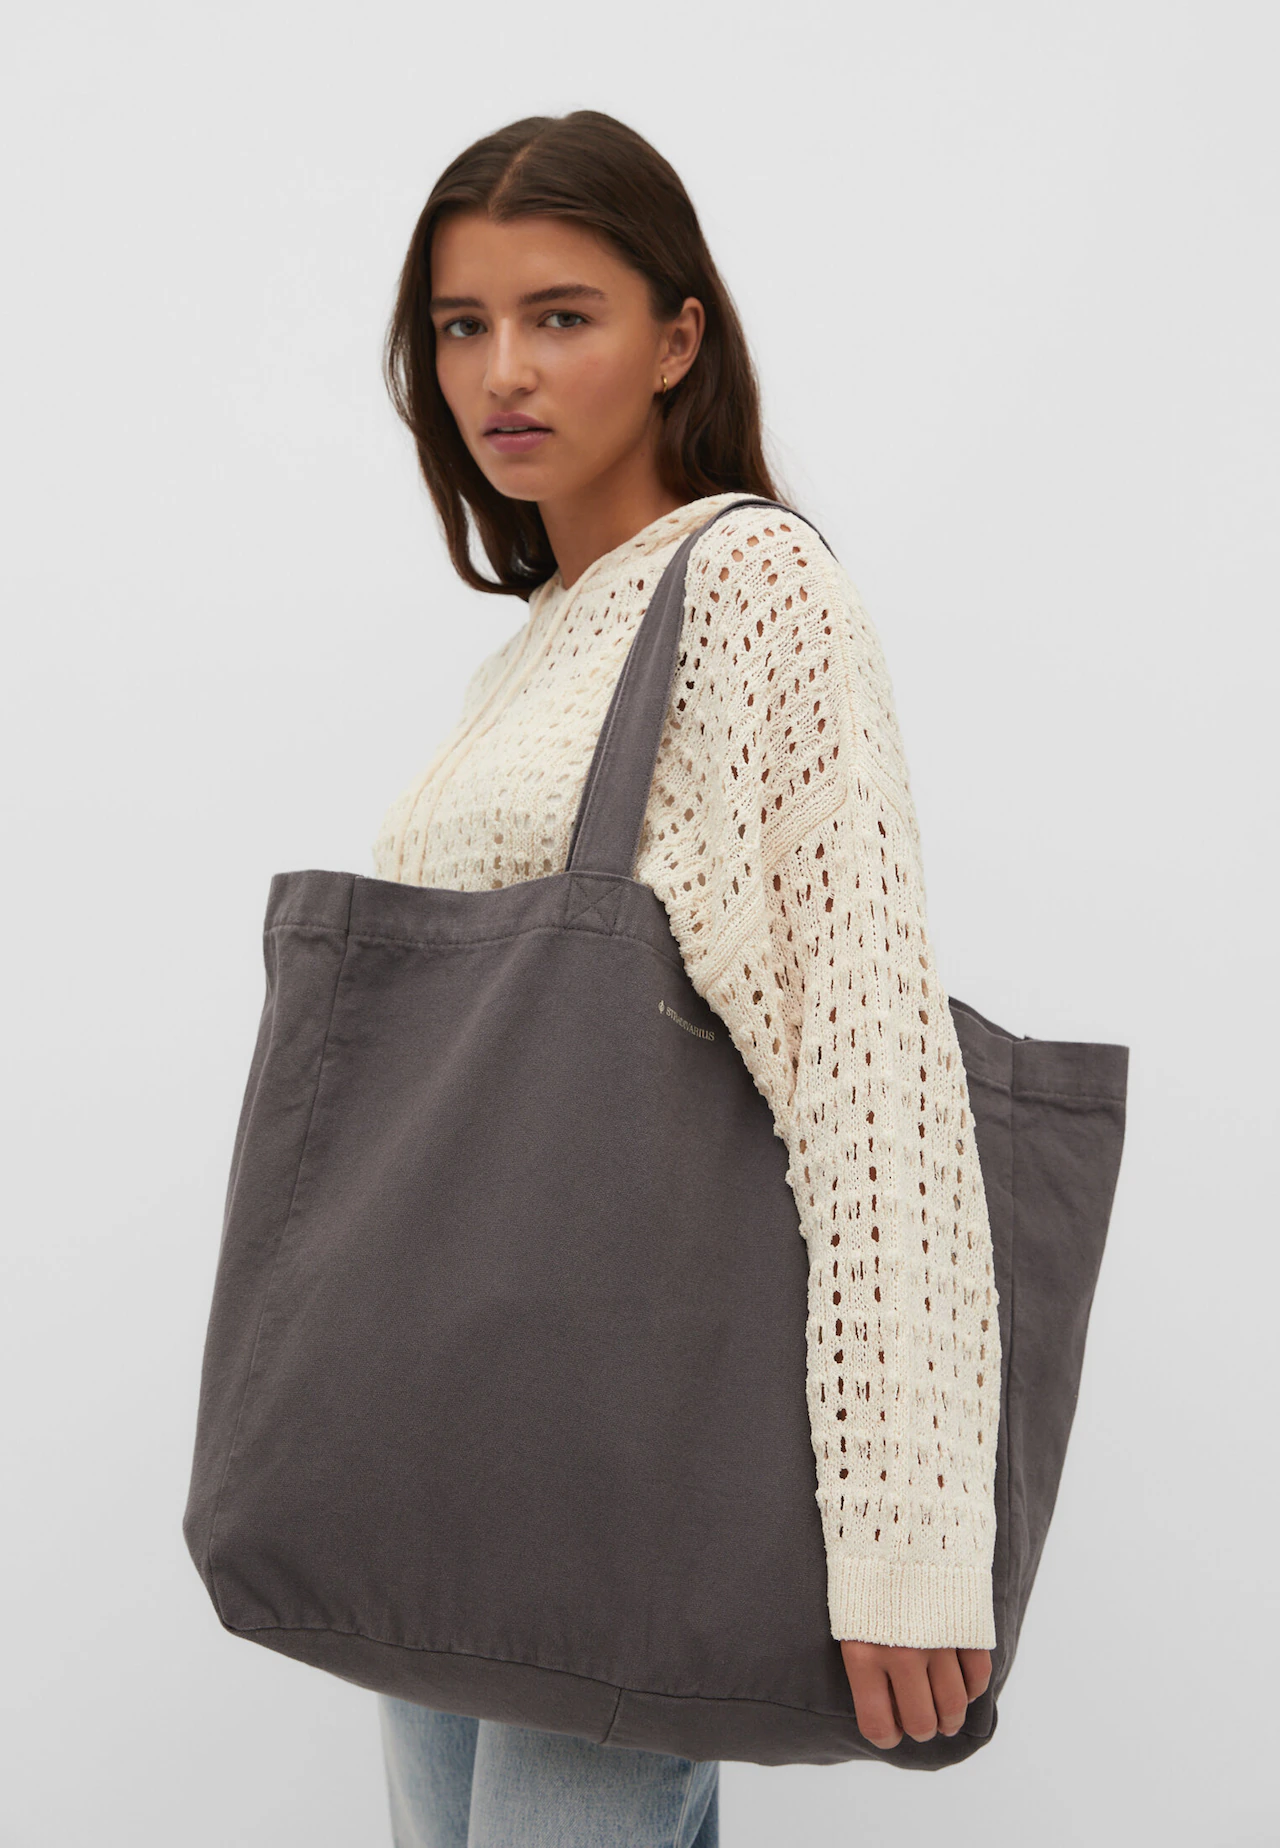 Faded-effect tote bag - Women's fashion